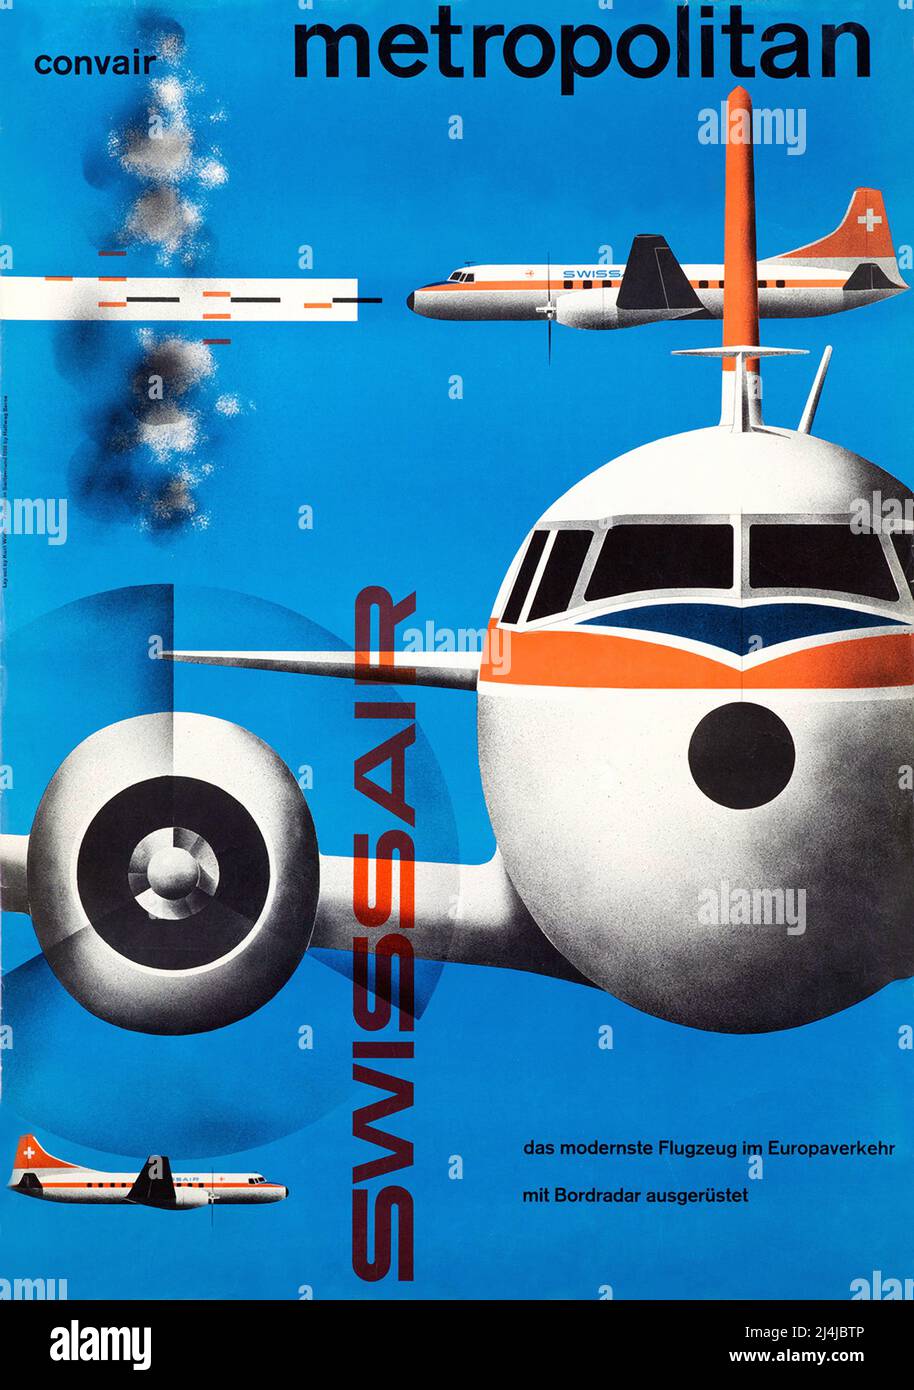 Vintage 1950s Travel Poster - Swissair - convair Metropolitan - Kurt Wirth - 1956 Banque D'Images